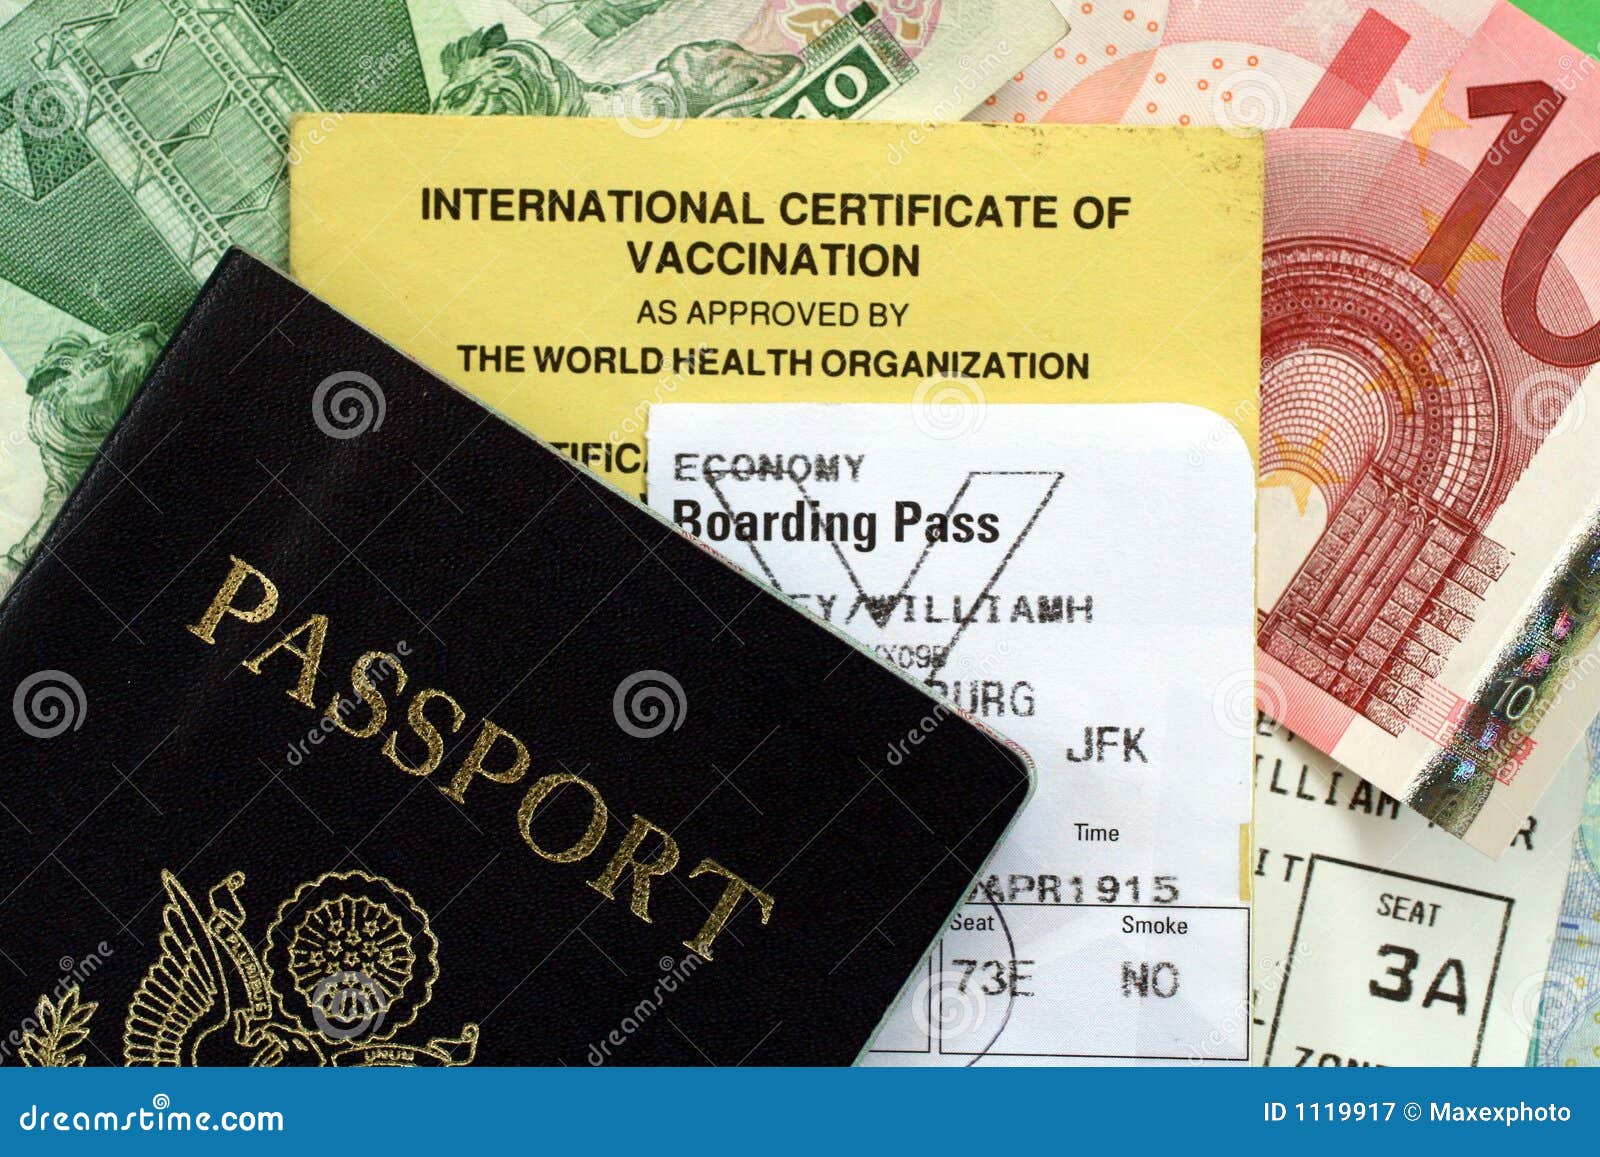 passport and travel documents